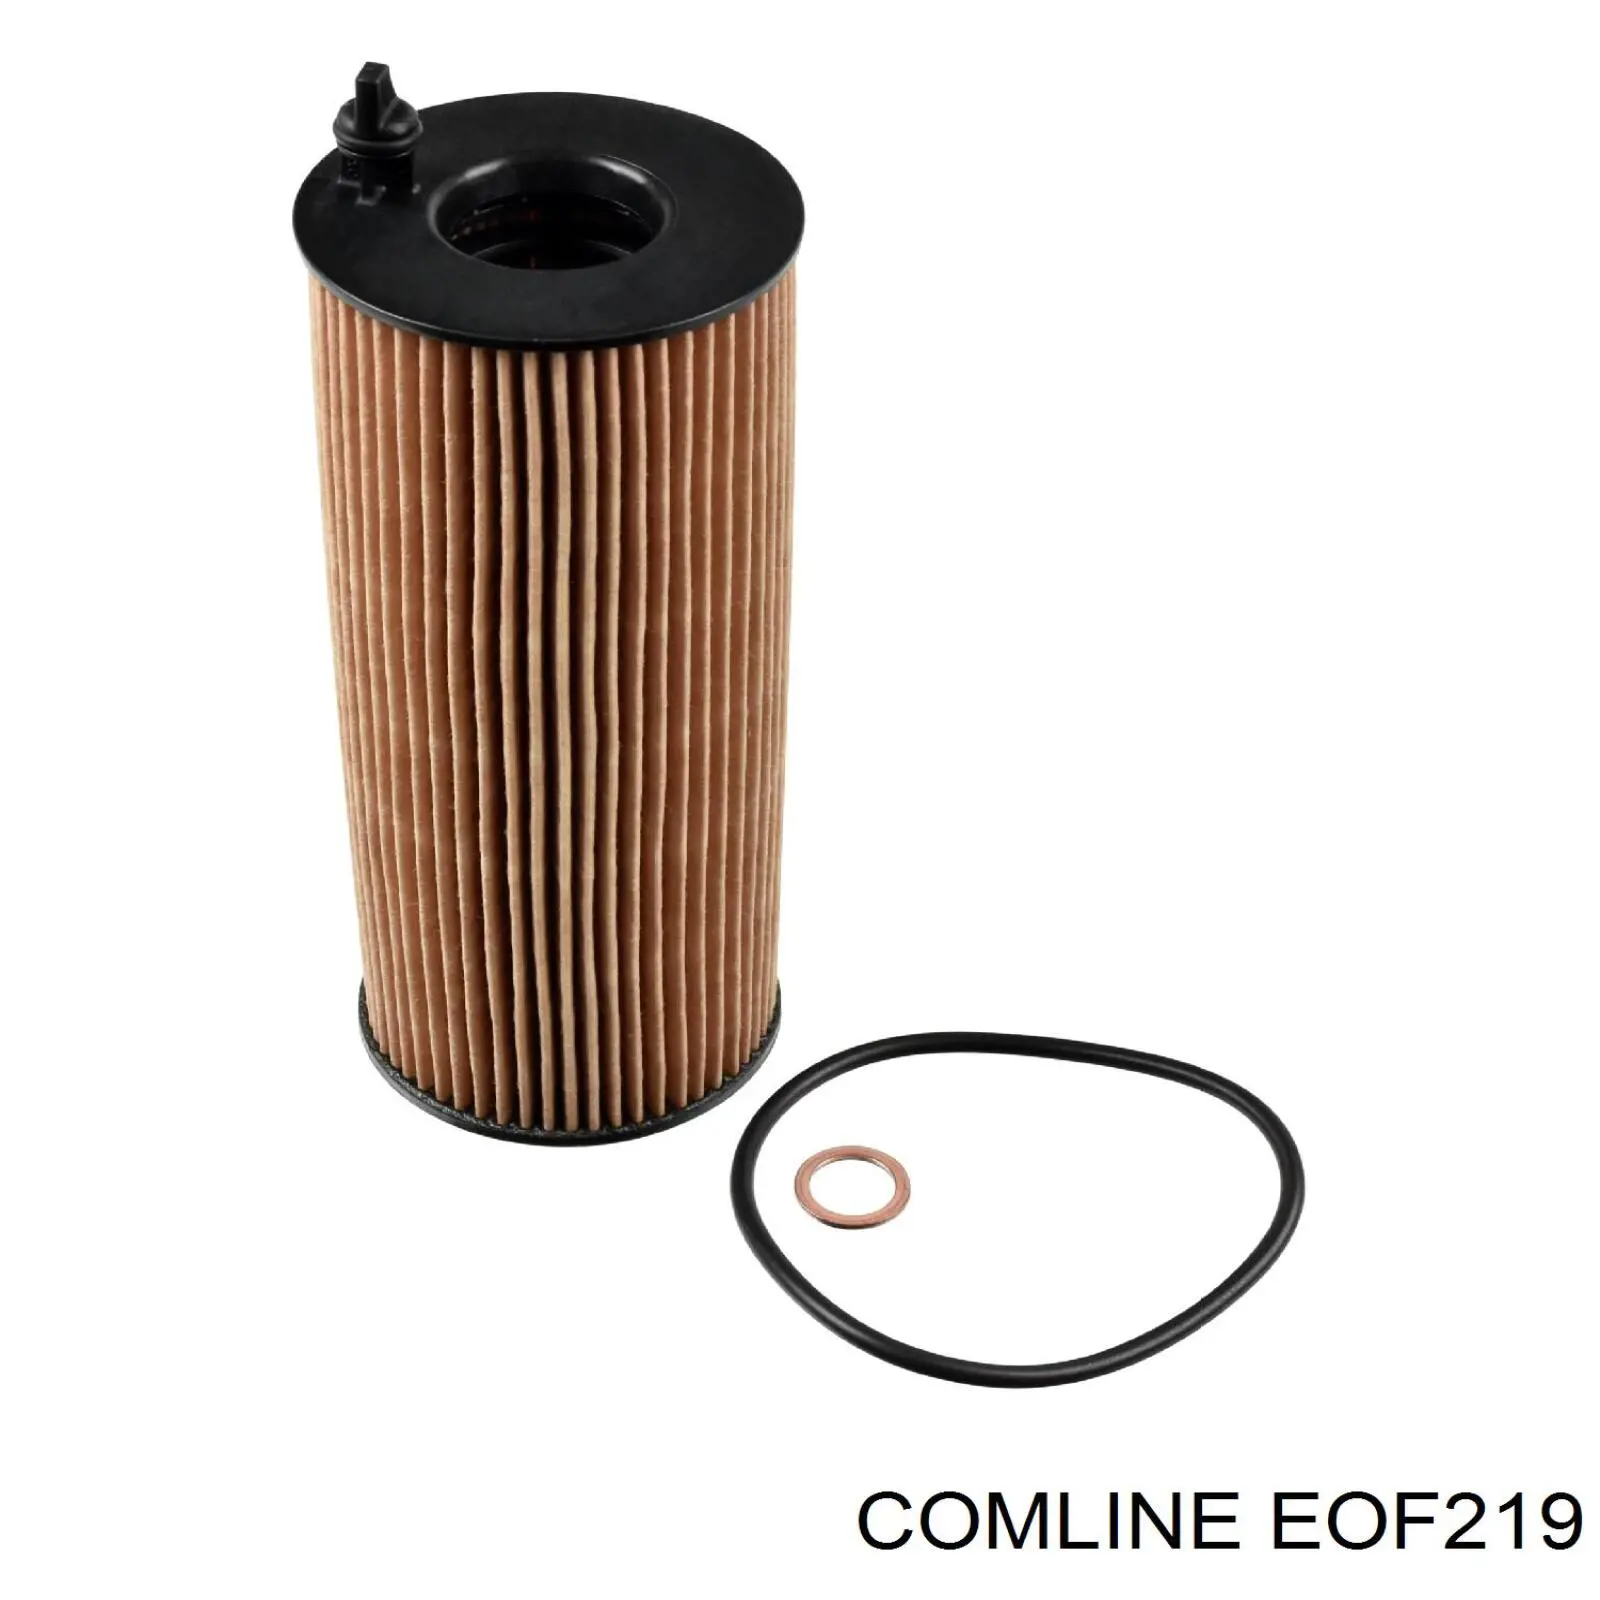 EOF219 Comline filtro de aceite